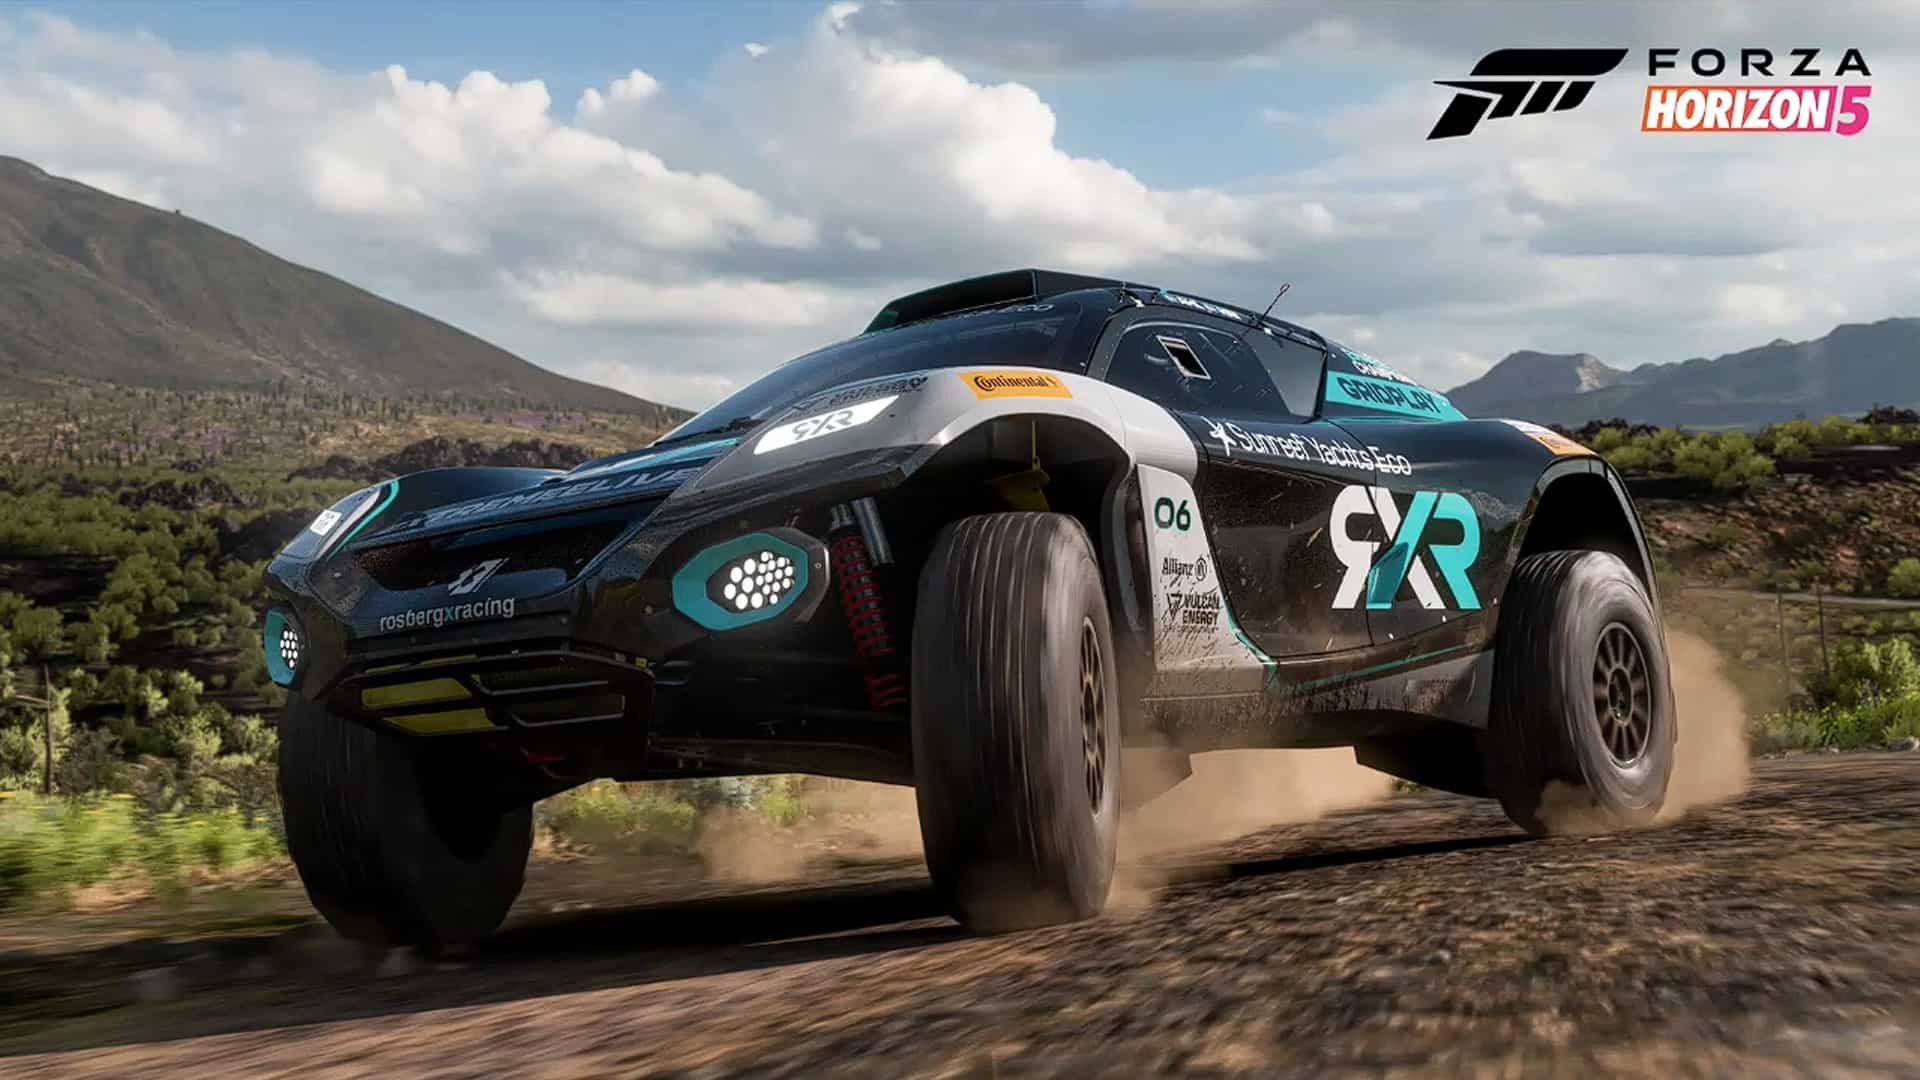 Forza Horizon 5 Series 10 features Extreme E, full playlist